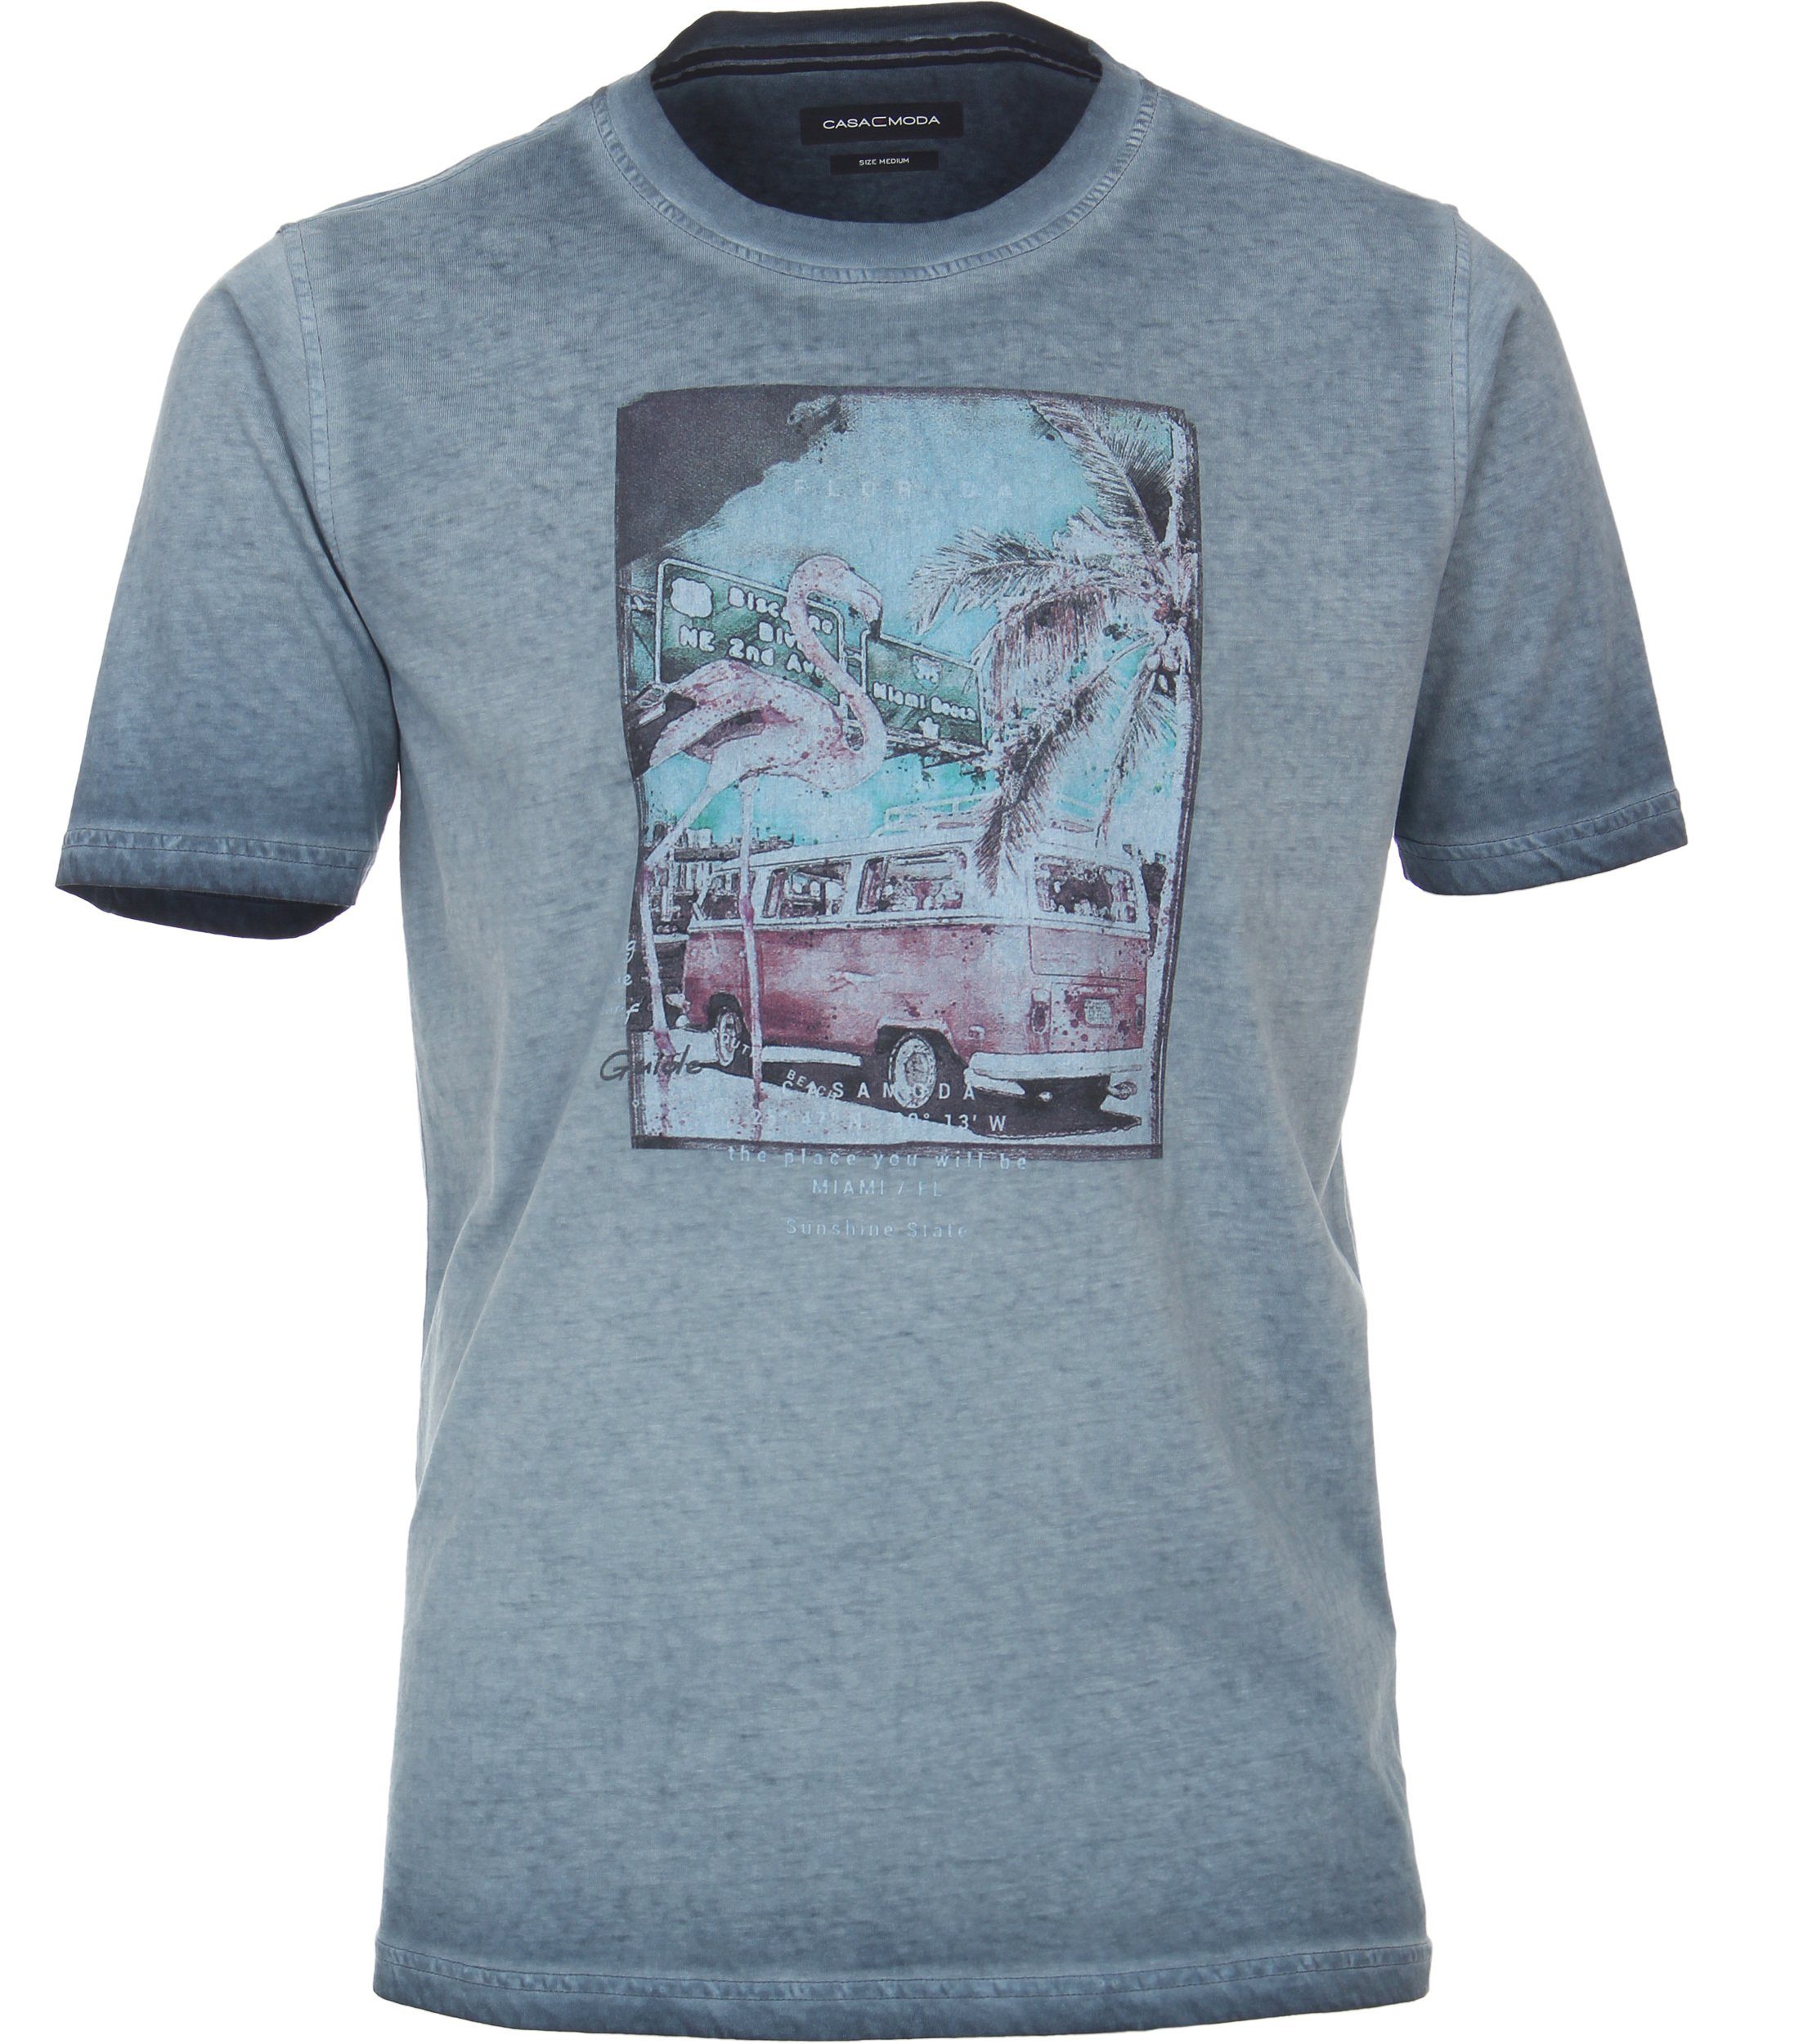 Mittelblau graues CASAMODA Print T-Shirt